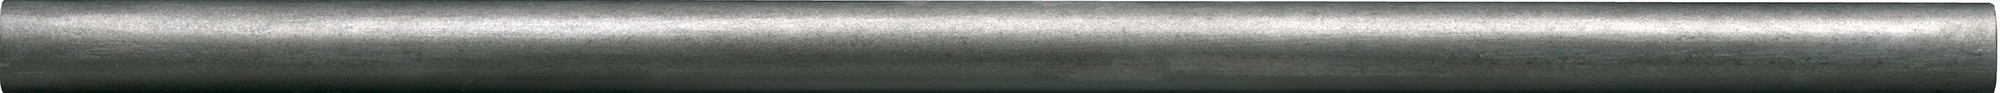 Forged Steel, Pencil Liner, 1/2X12, Sati